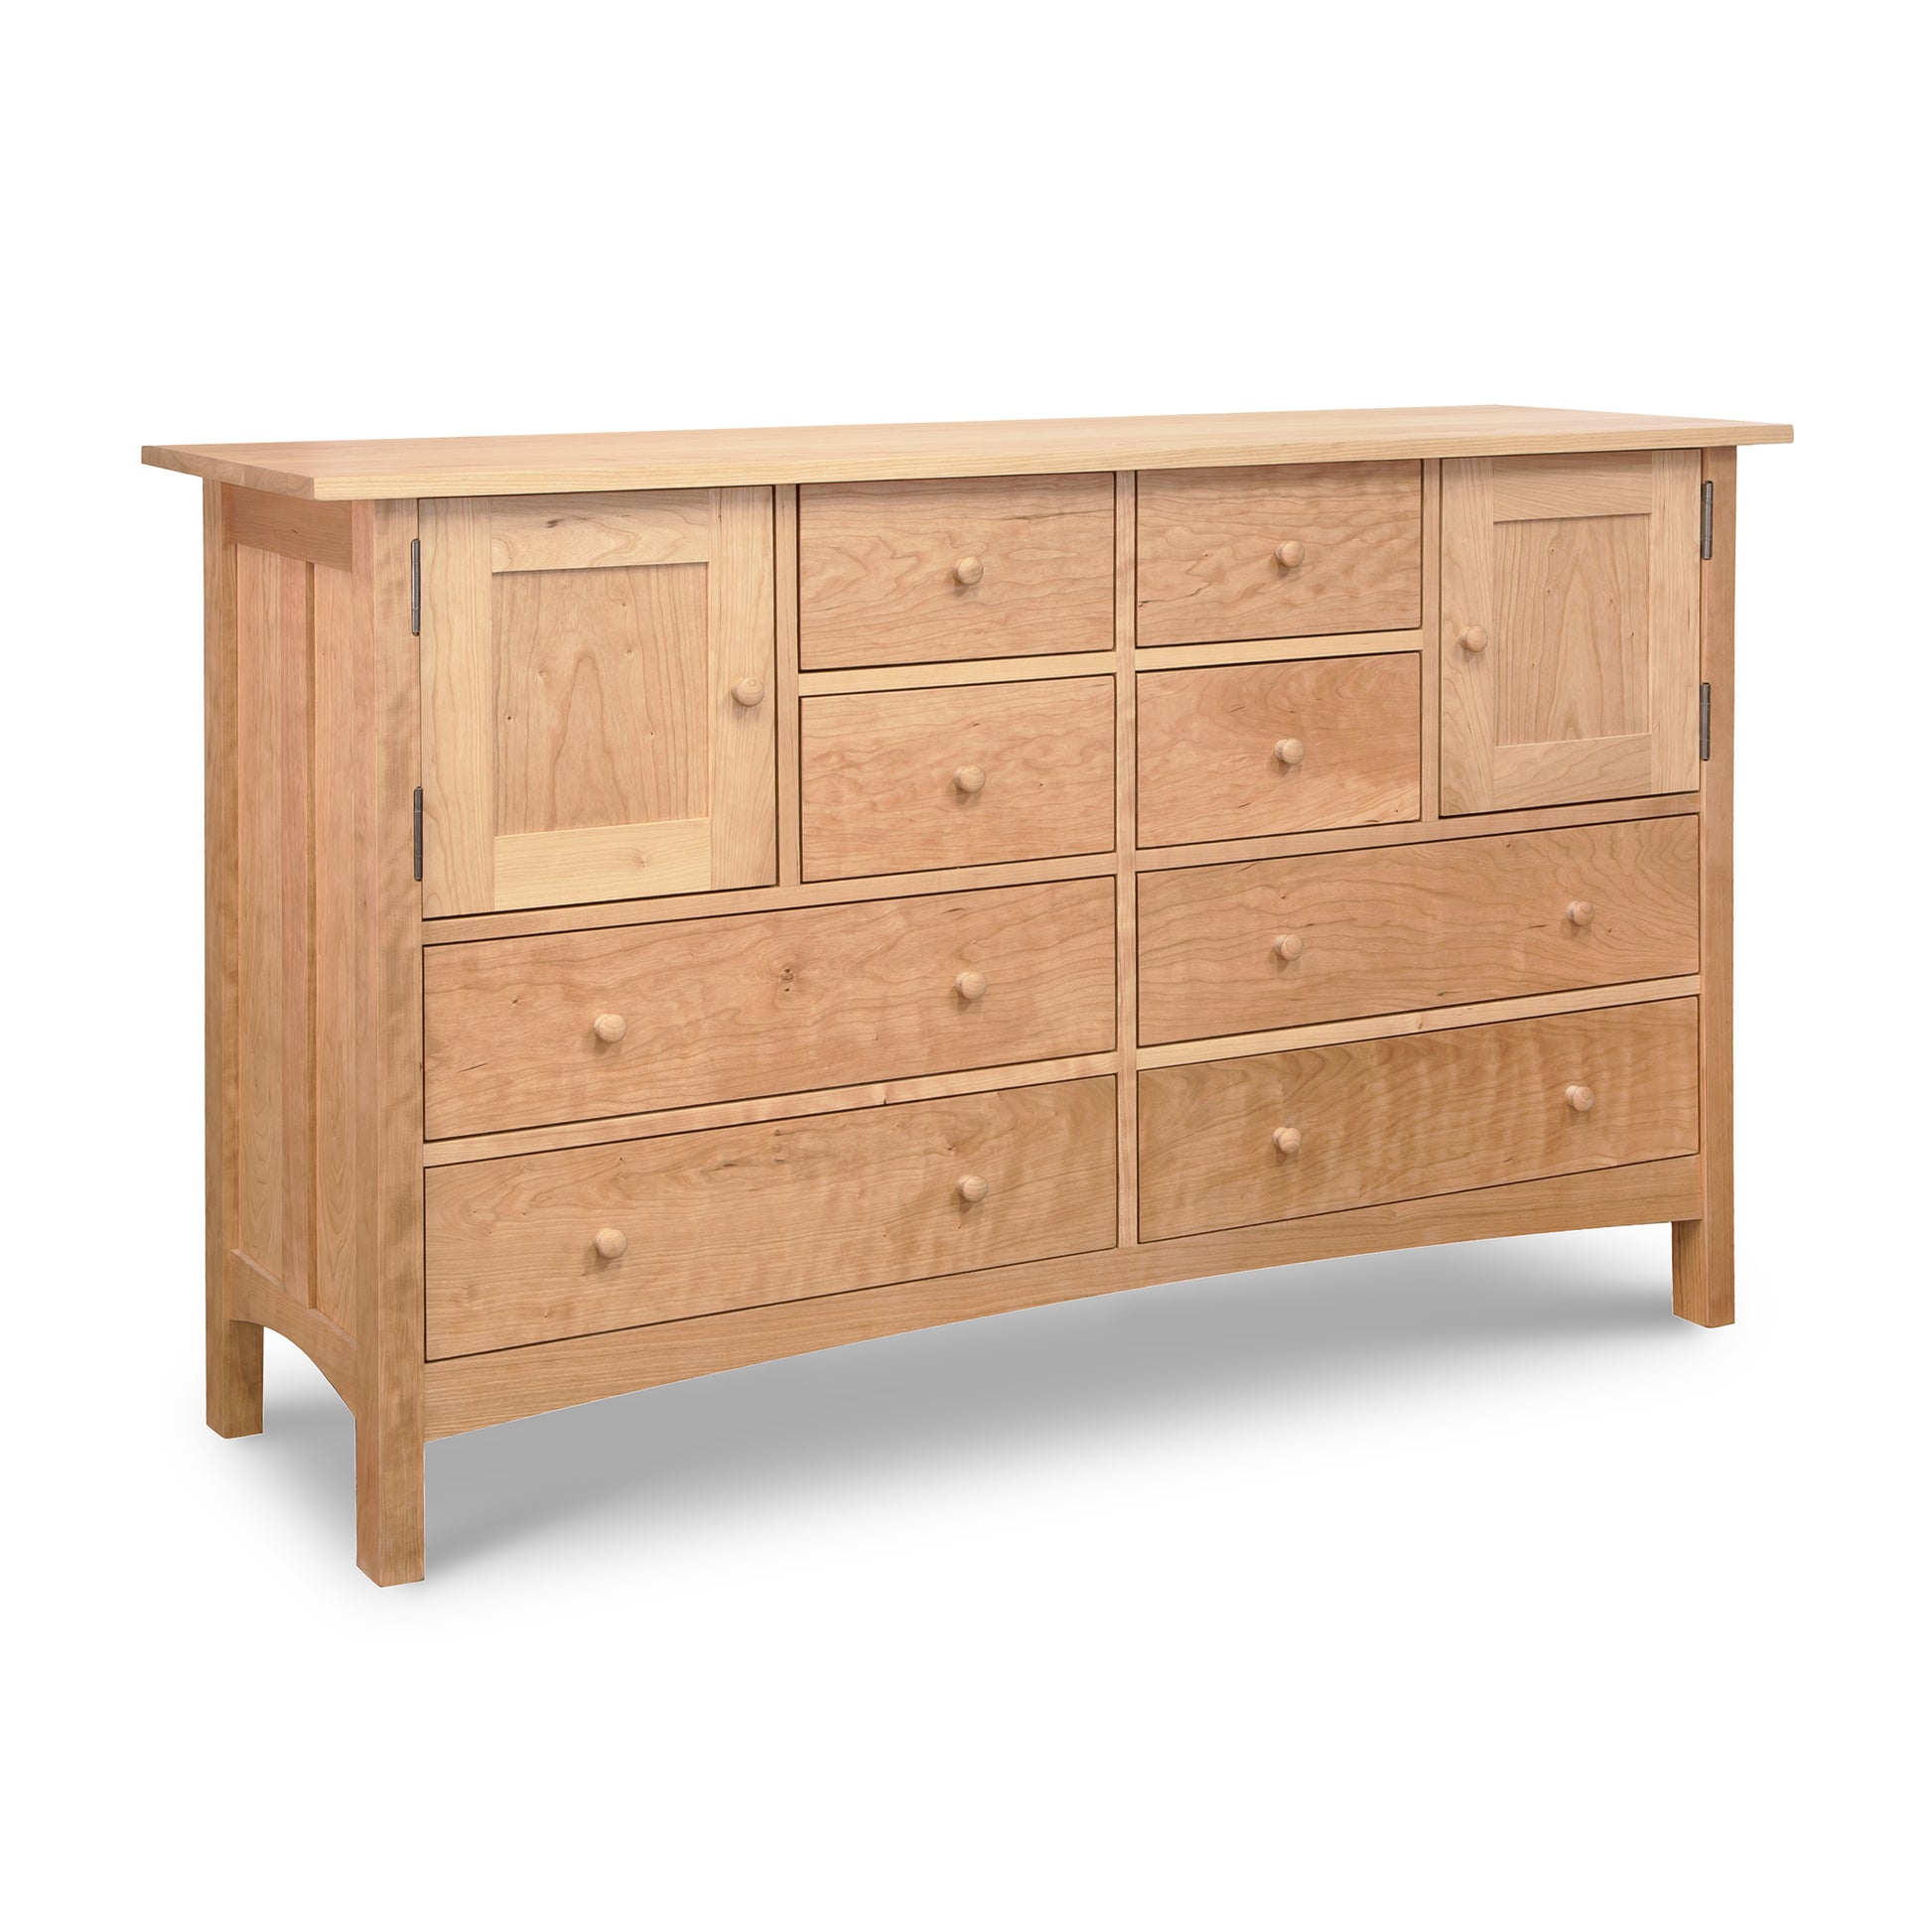 A luxury wooden dresser with drawers in the Vermont Furniture Designs Burlington Shaker 8-Drawer 2-Door Dresser style.